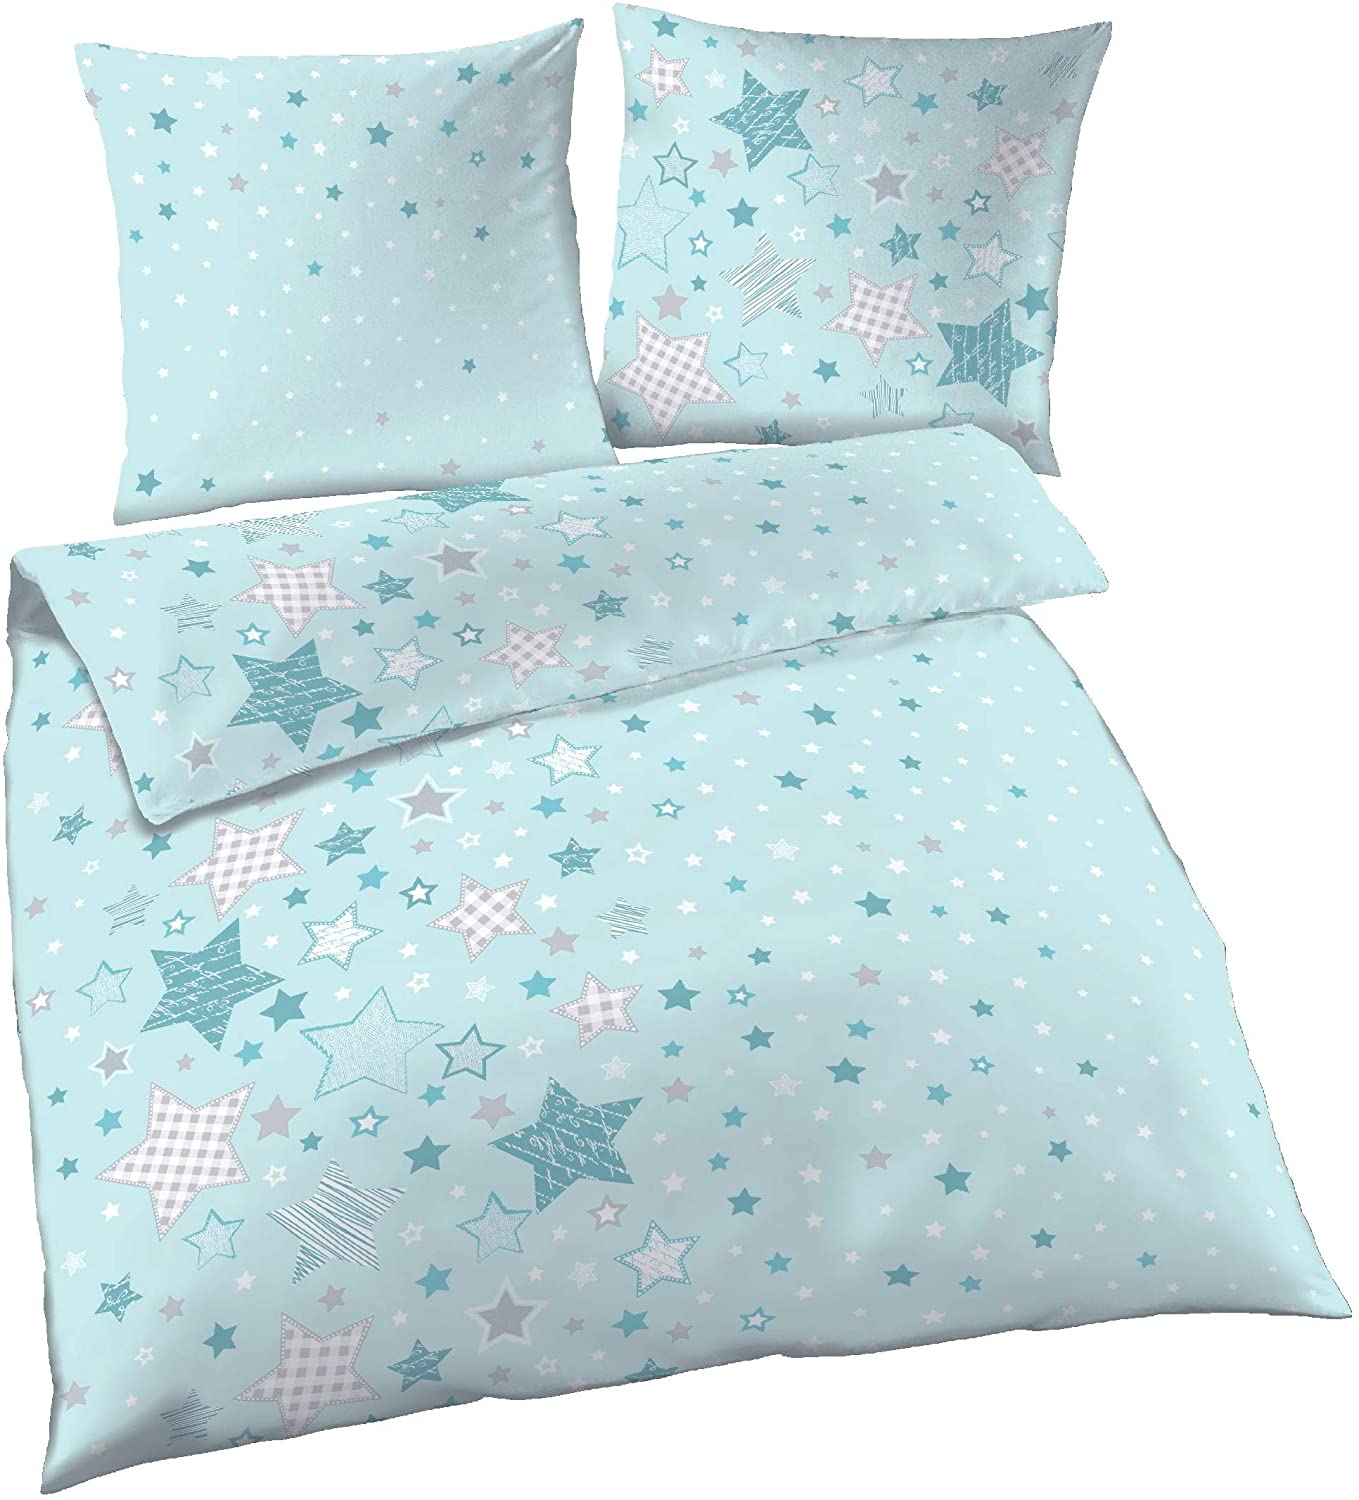 Stars Fine Flannelette Girls Bed Linen Stars and Stars Mint - Pillowcase 80 x 80 cm + Duvet Cover 135 x 200 cm - 100% Cotton